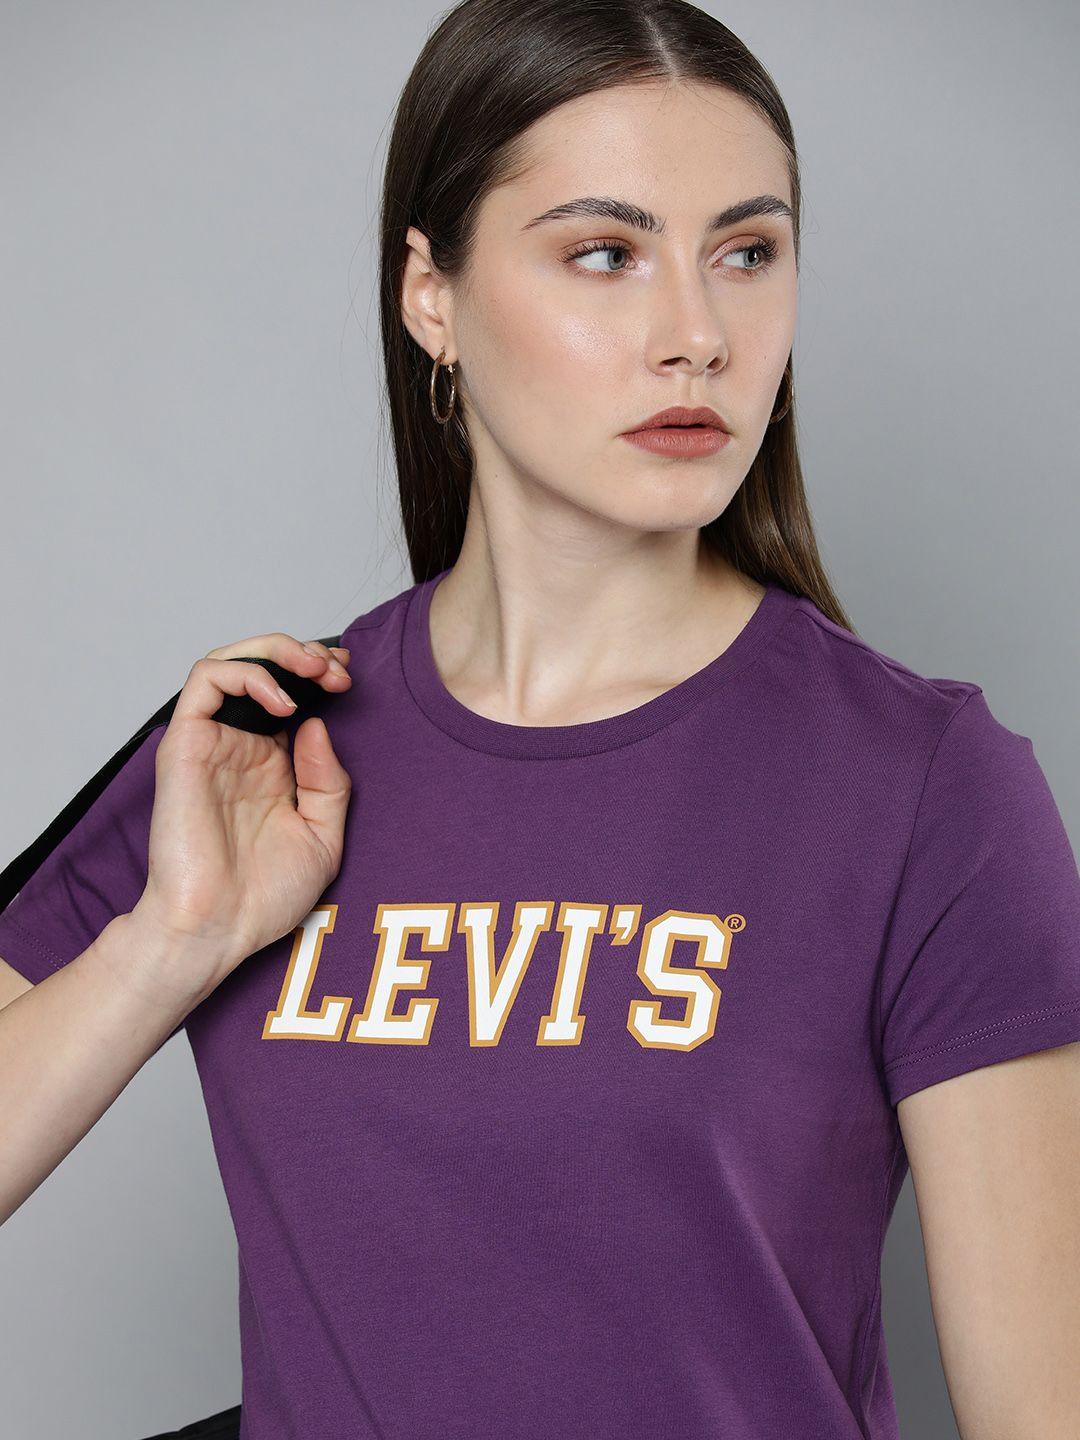 levis women brand logo printed pure cotton round neck t-shirt